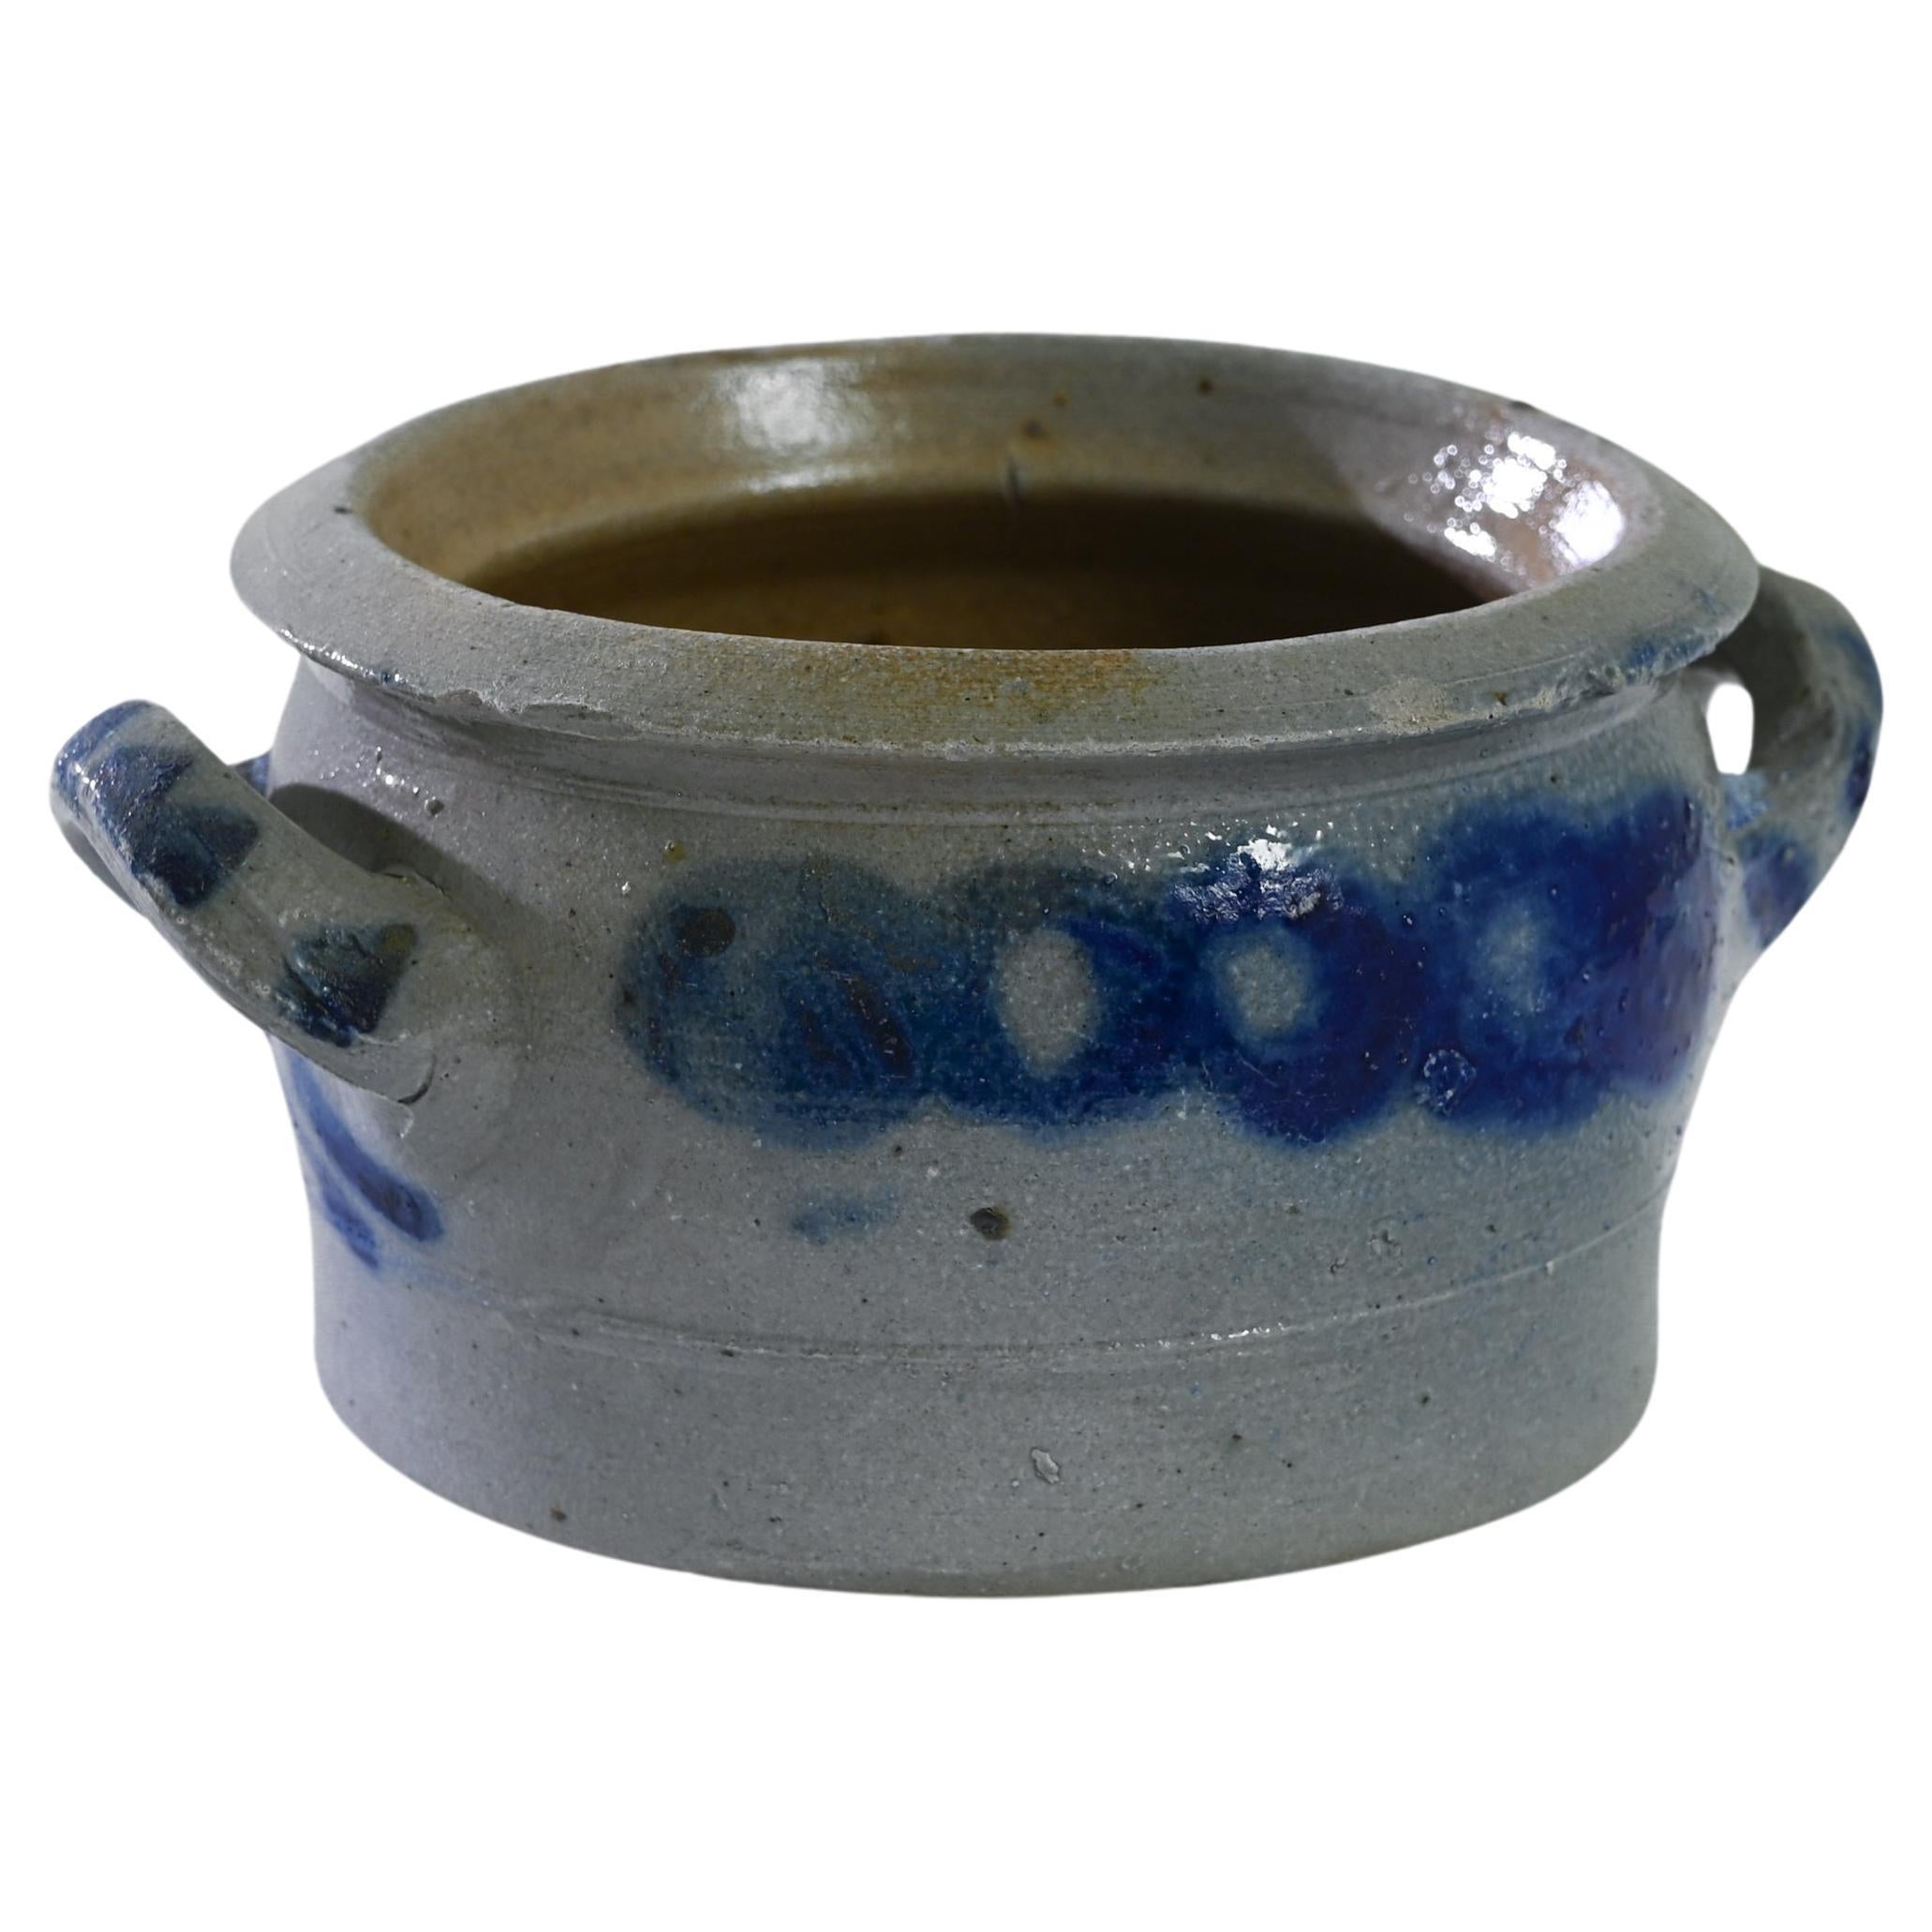 1900s Belgian Ceramic Pot